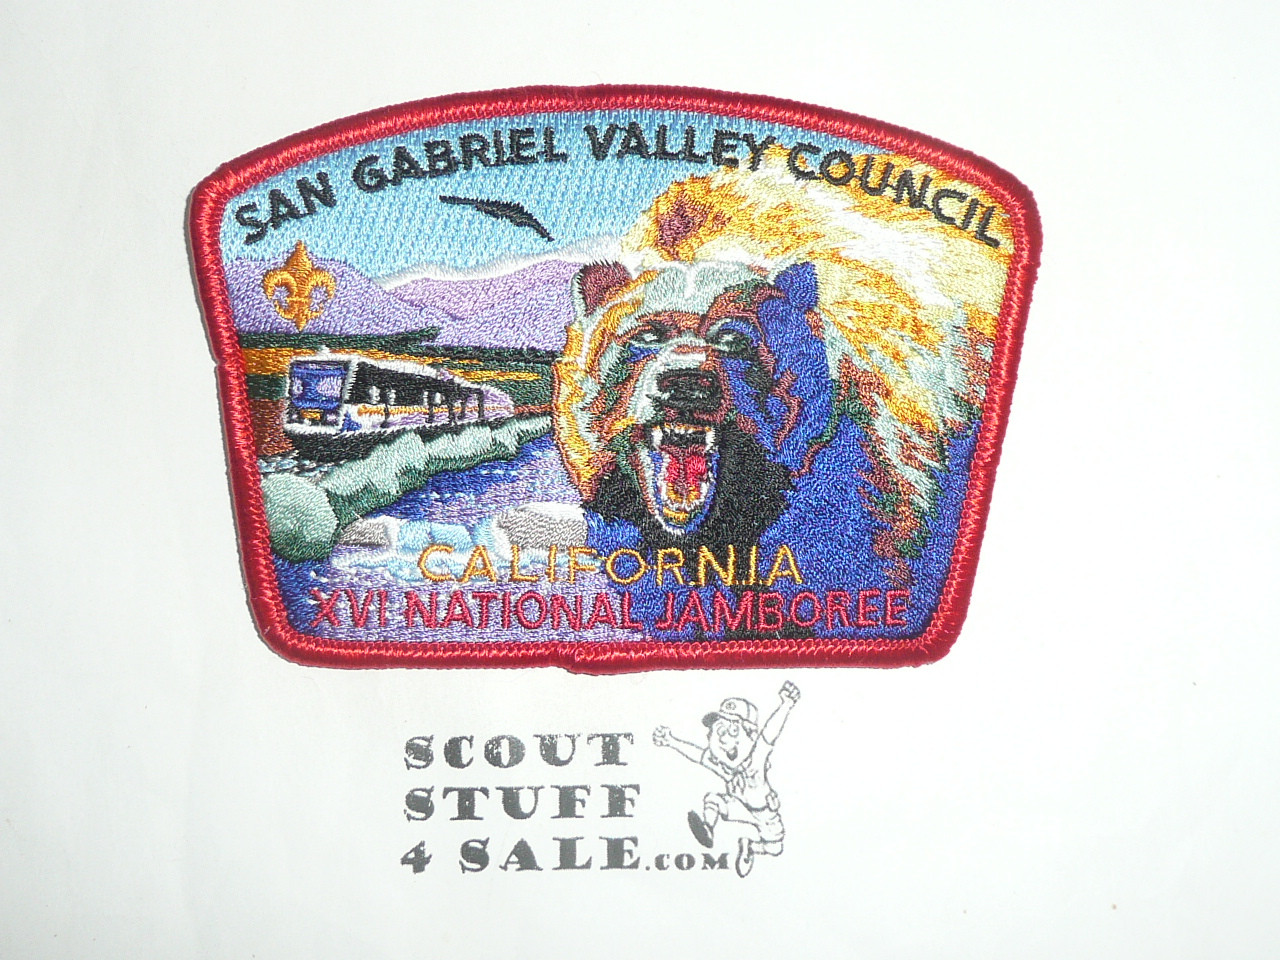 2005 National Jamboree JSP - San Gabriel Valley Council Jamboree Shoulder Patch, Red bdr